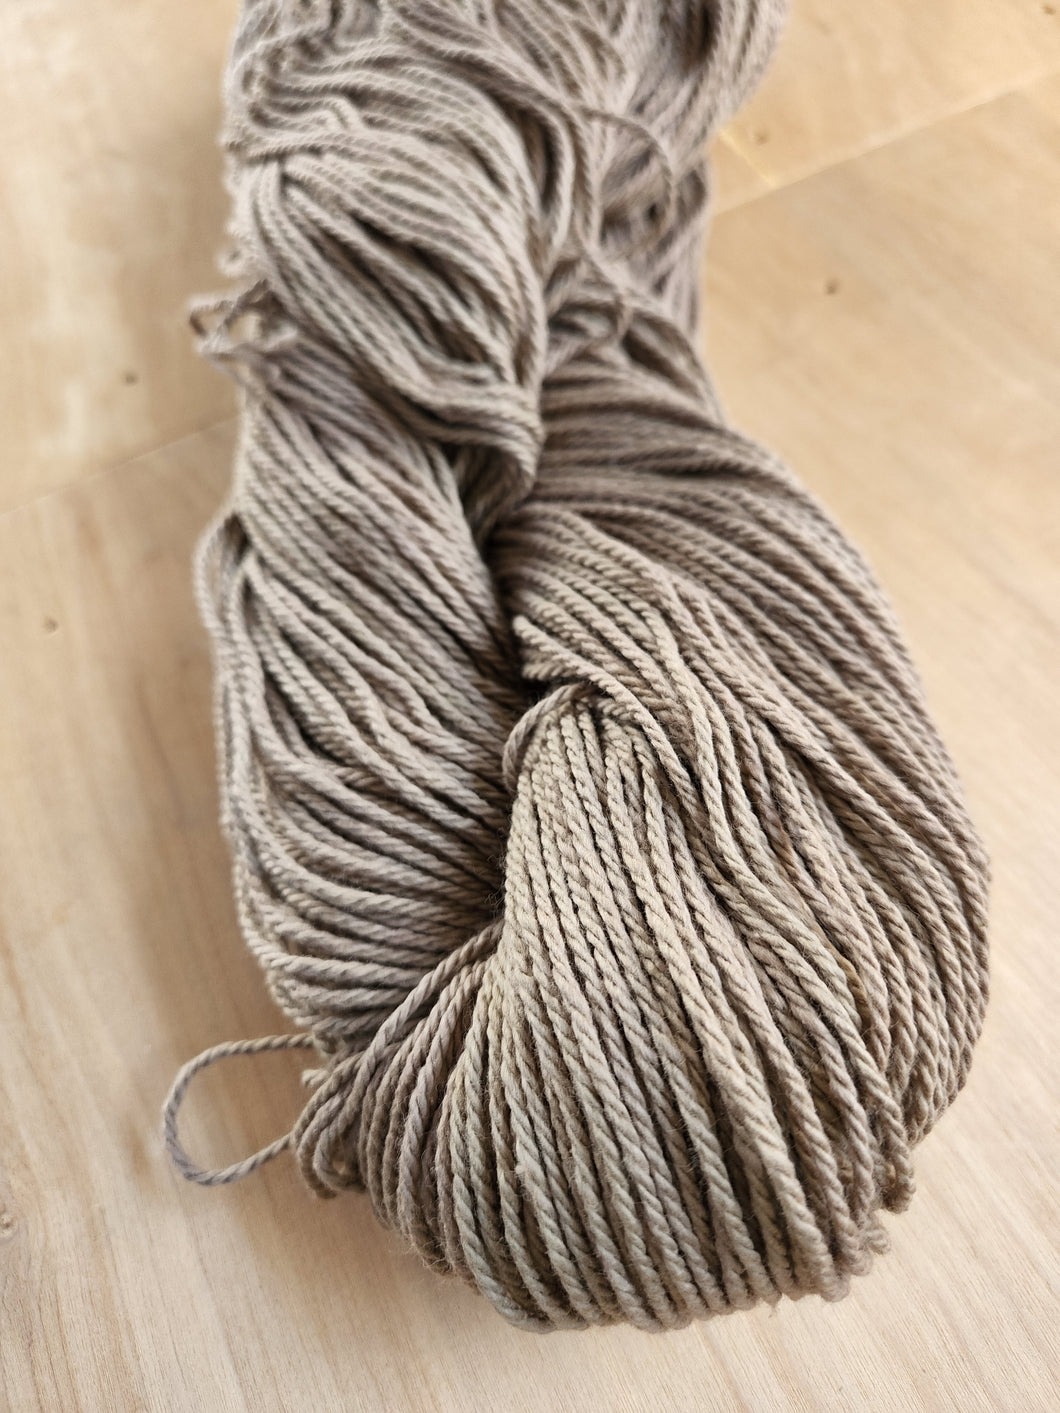 Cestari 100% VA Cotton Old Dominion DK Weight Yarn – Ewethful